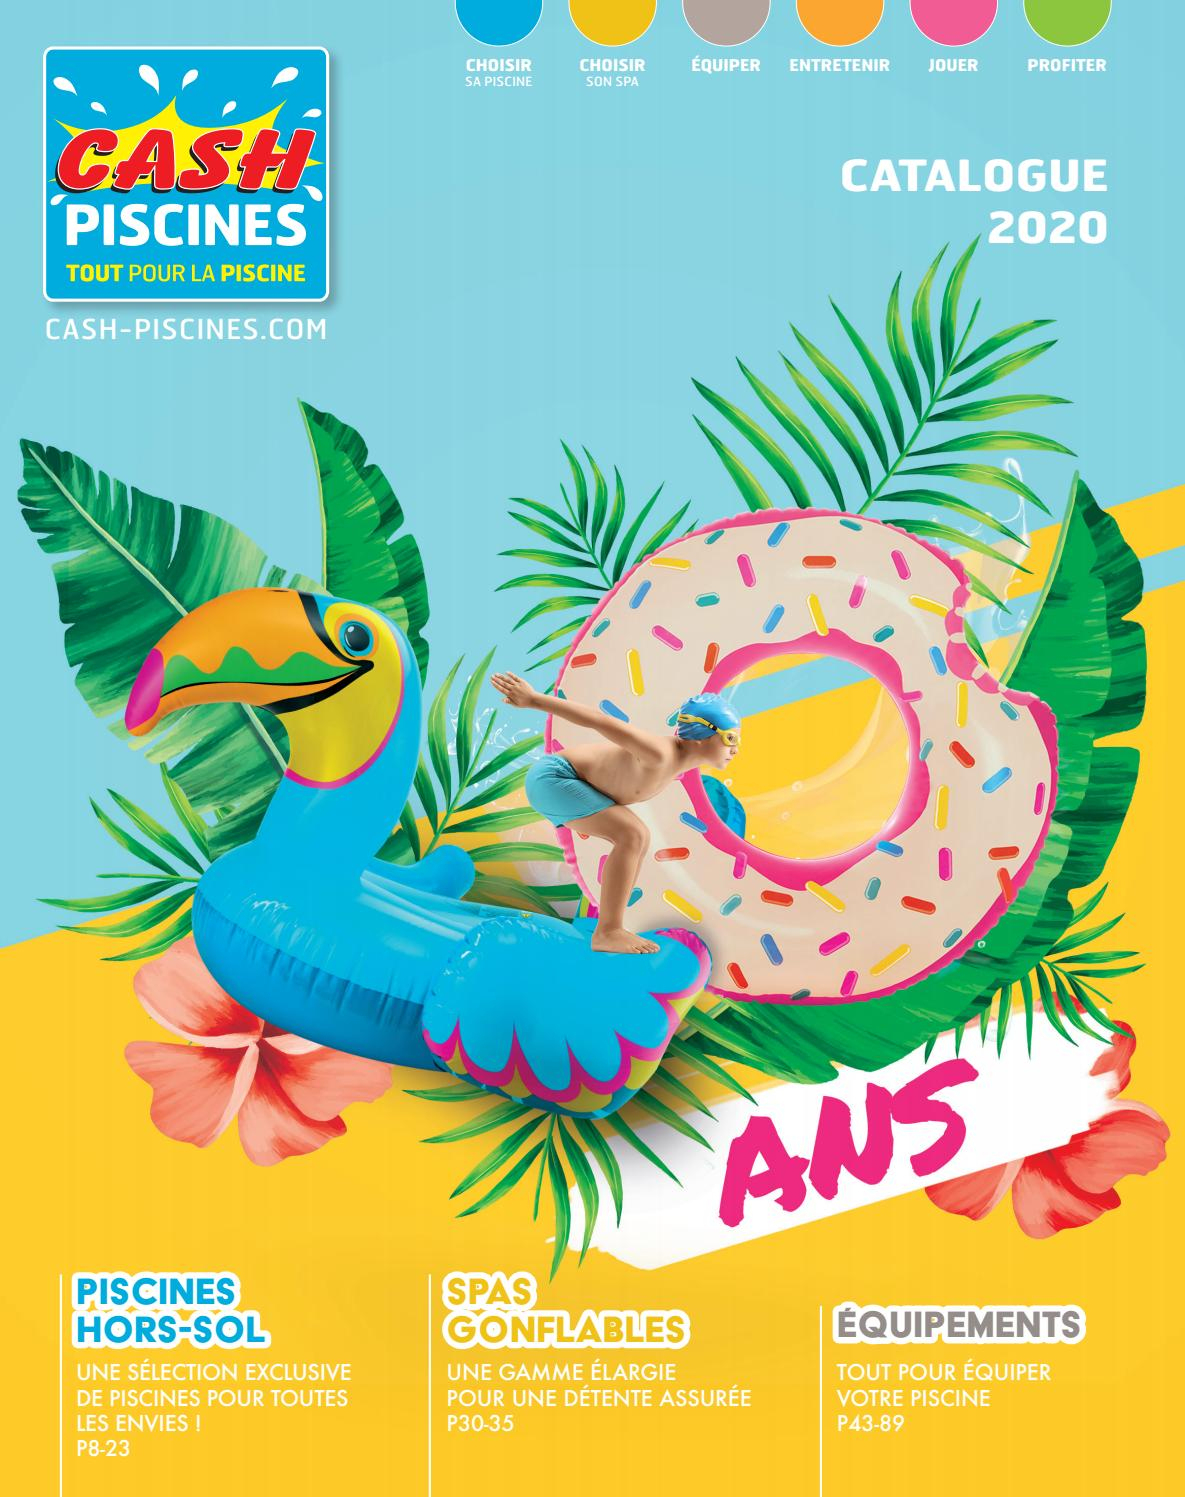 Catalogue Cash Piscines 2020 By Cashpiscines2 - Issuu concernant Cash Piscine Chalon